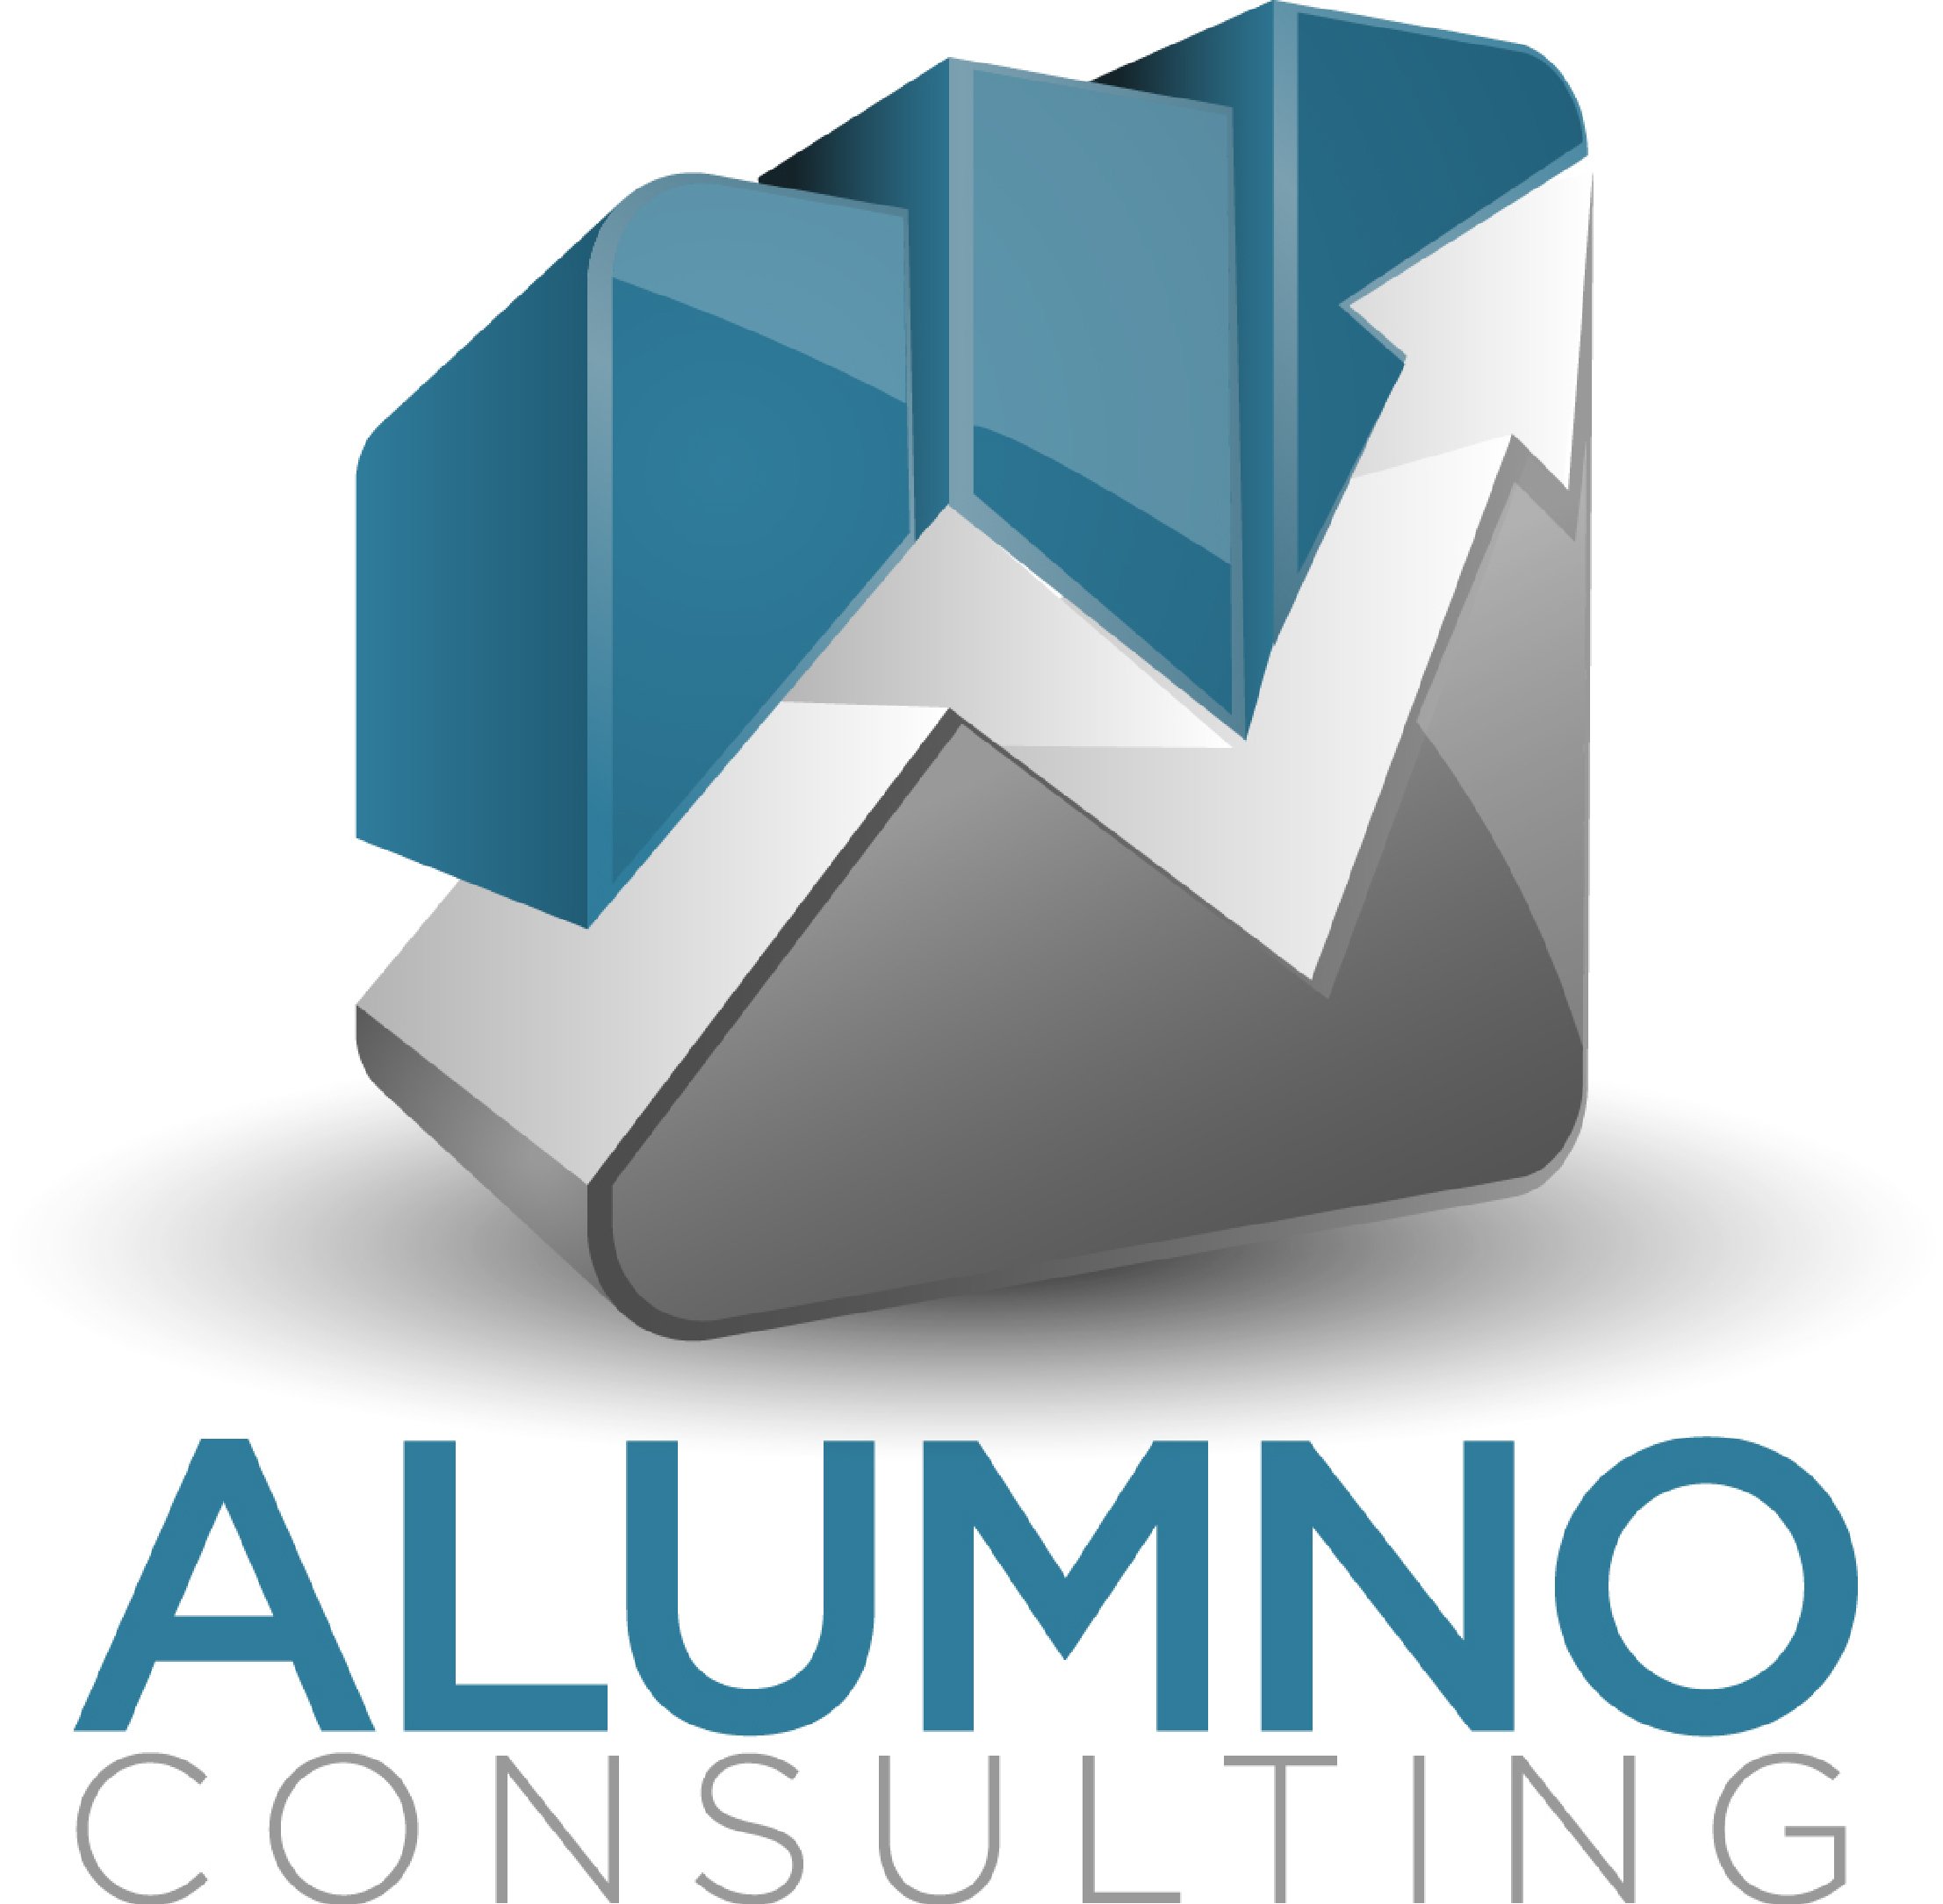 Alumno Consulting logo